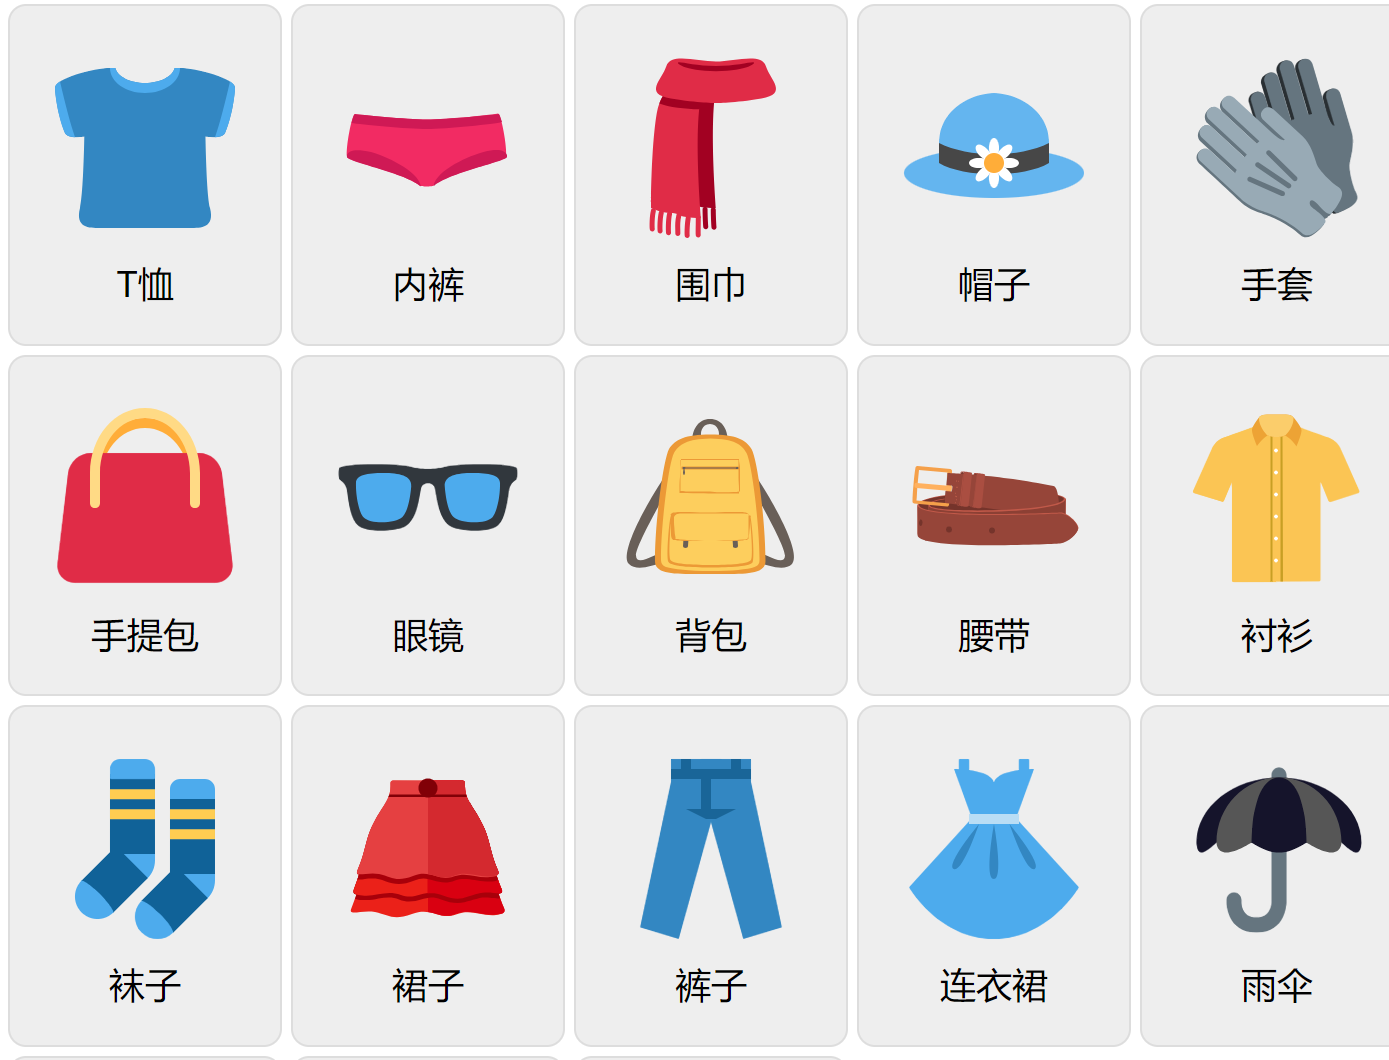 Одежда на китайском языке (мандарин)